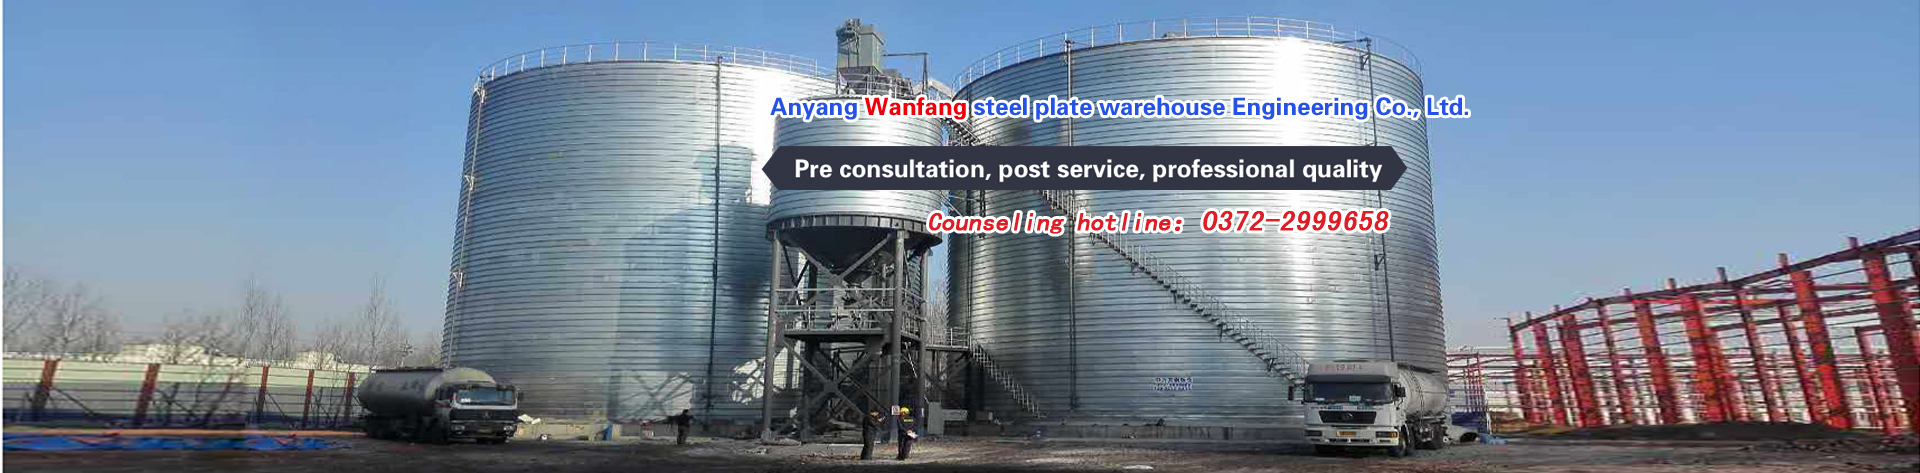 Anyang Wanfang steel plate warehouse Engineering Co., Ltd.